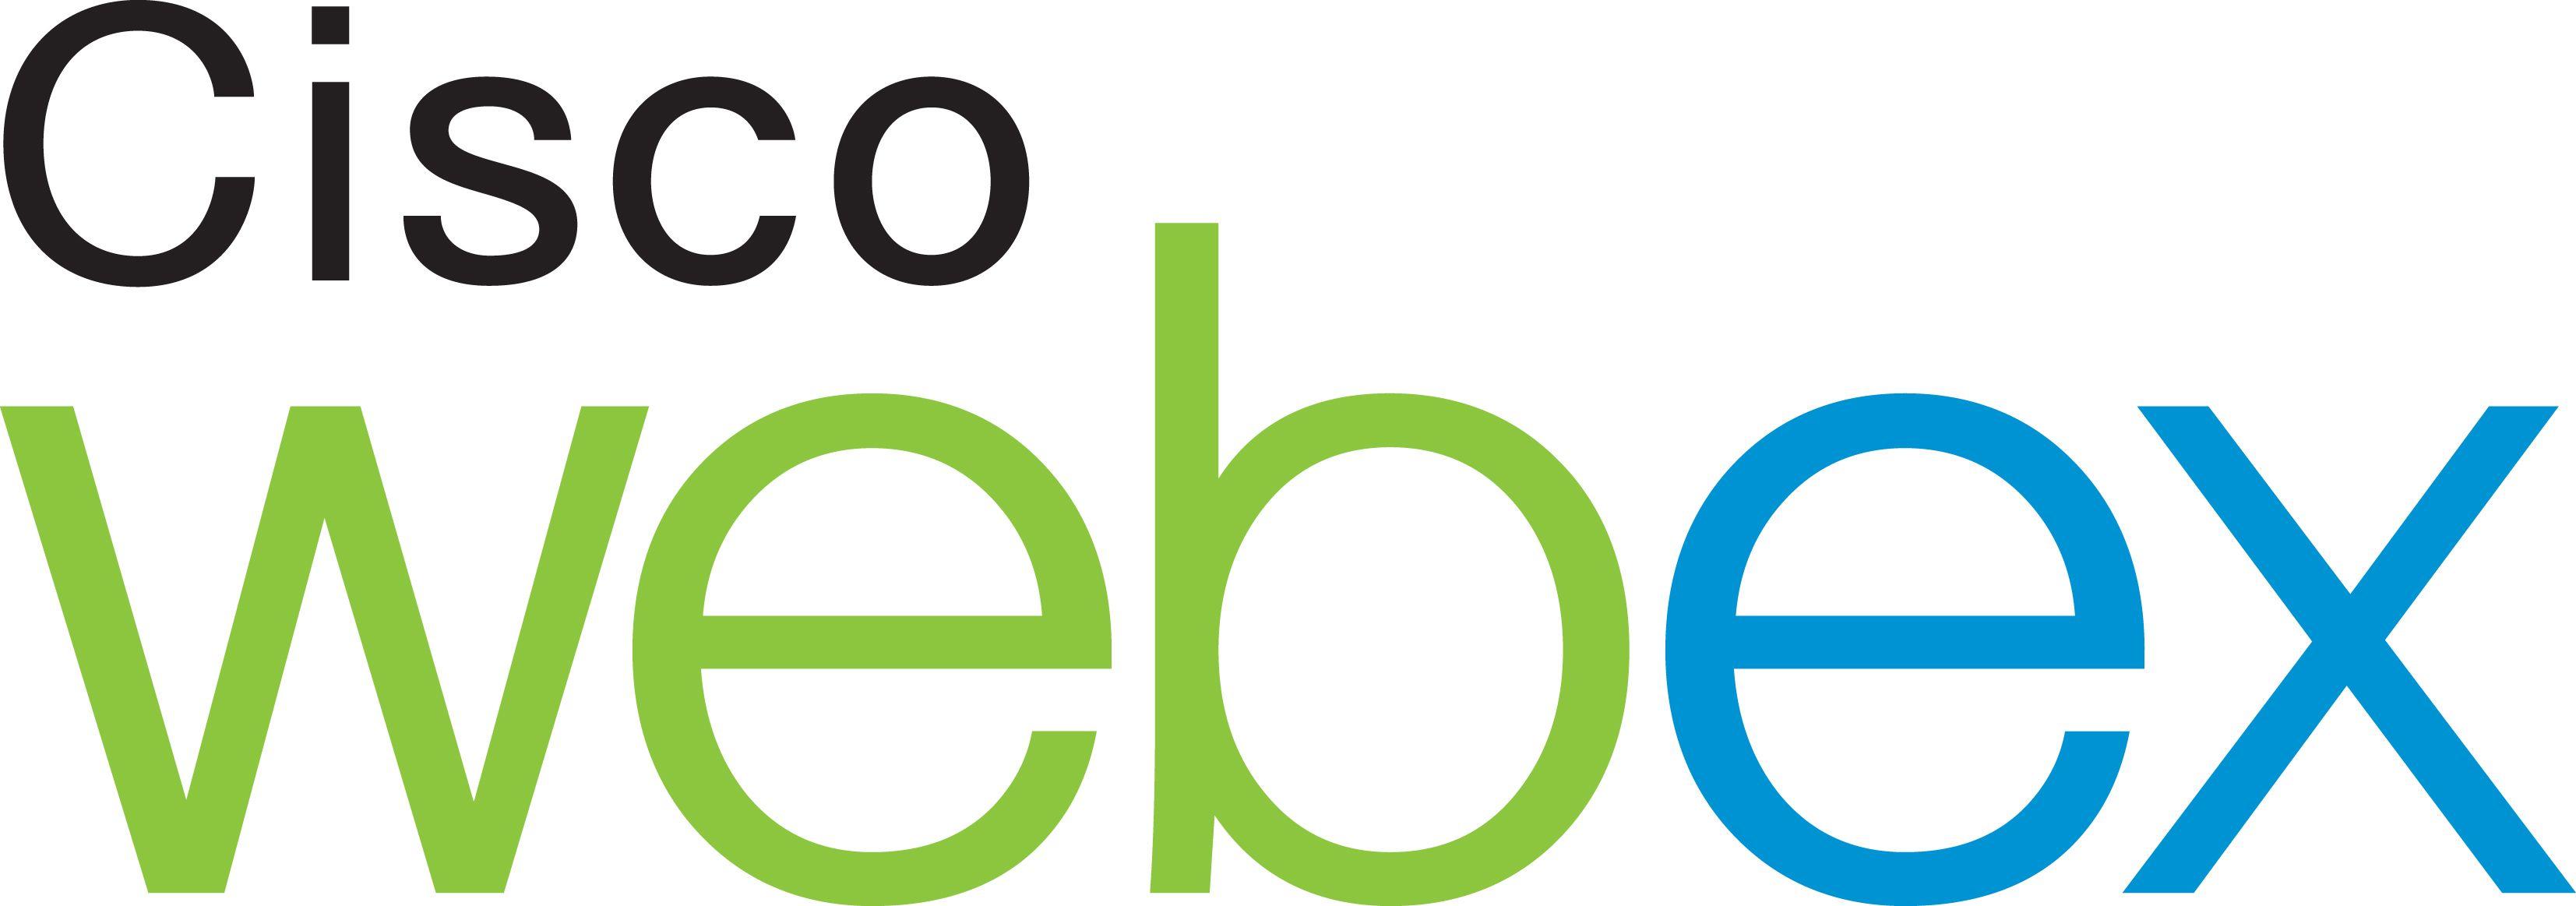 New WebEx Logo - Article